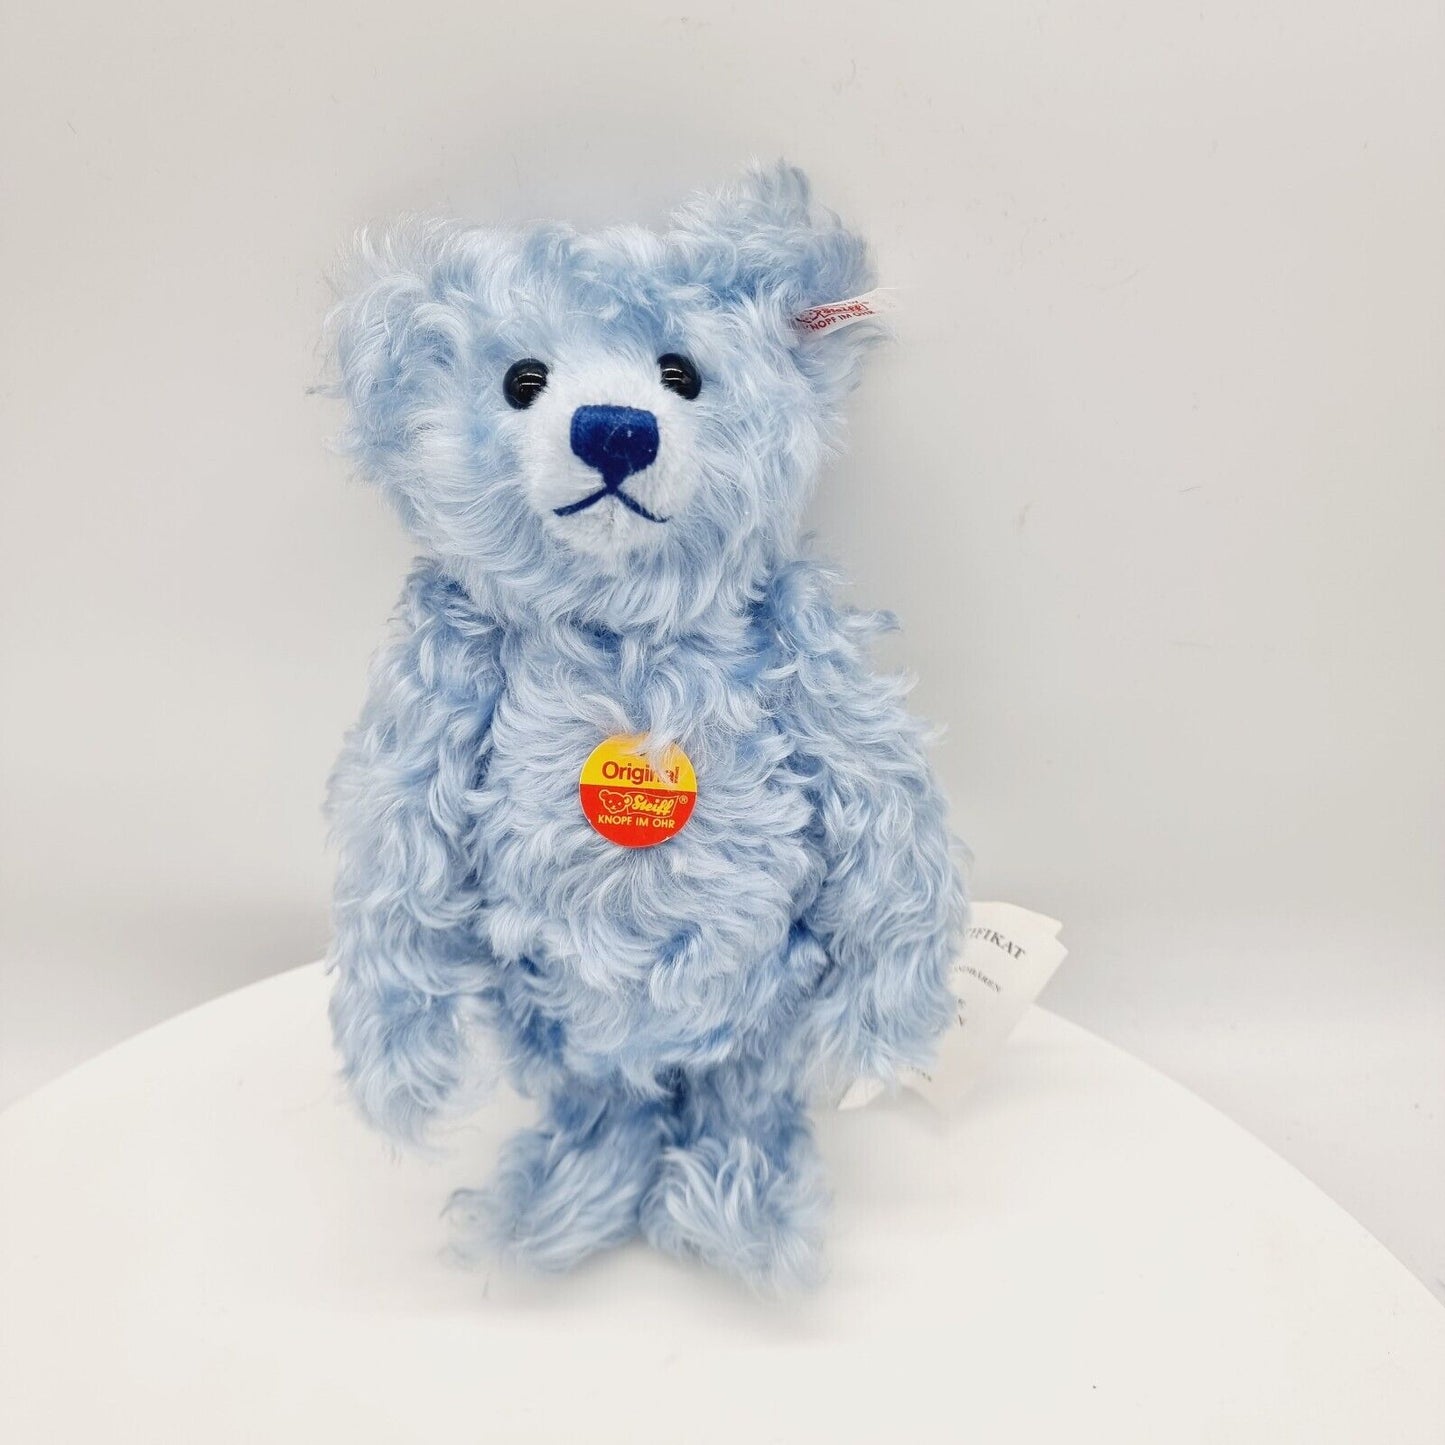 Steiff 670725 Teddybär Wasser Mohair hellblau 32 cm limitiert 2000 Jahr 2001